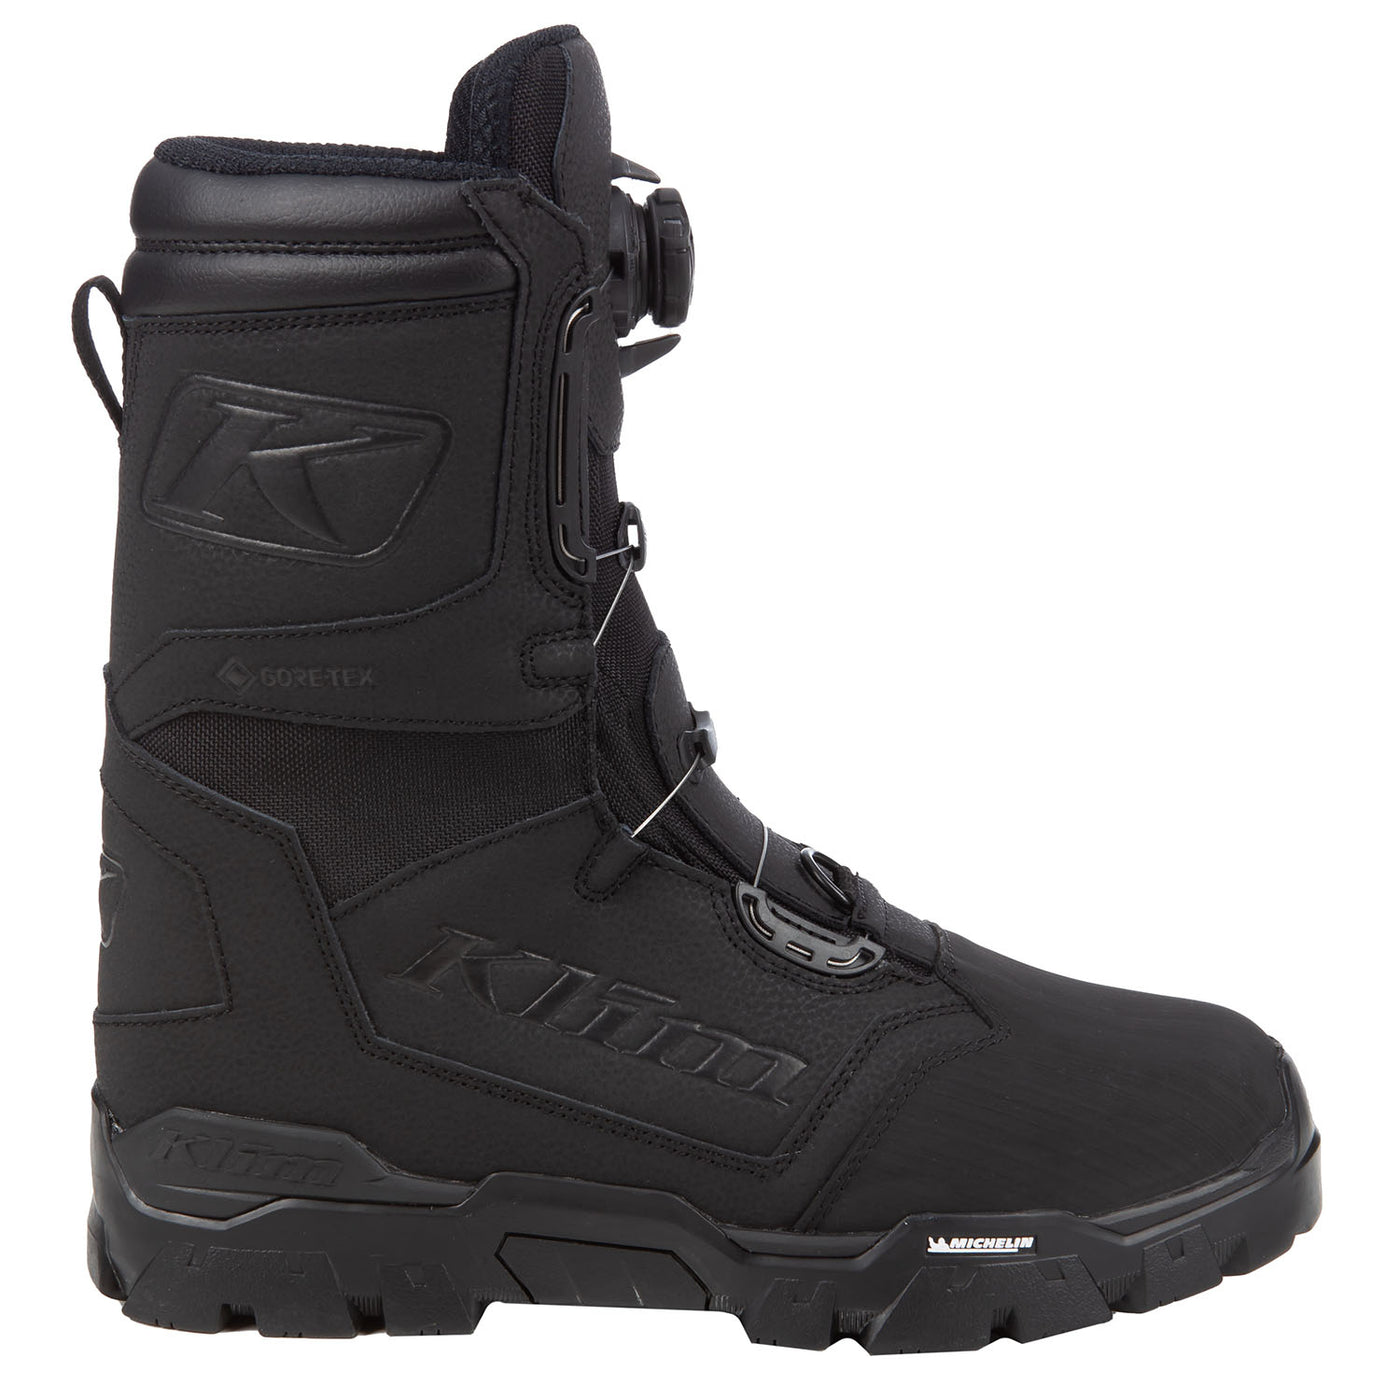 Klim, Klim Klutch GTX BOA Boot, Snowmobile Boots, Snow Boots, Men's Snow Boots, Women's Snow Boots, Boots, Boa Boots, Snow Gear, 3112-001